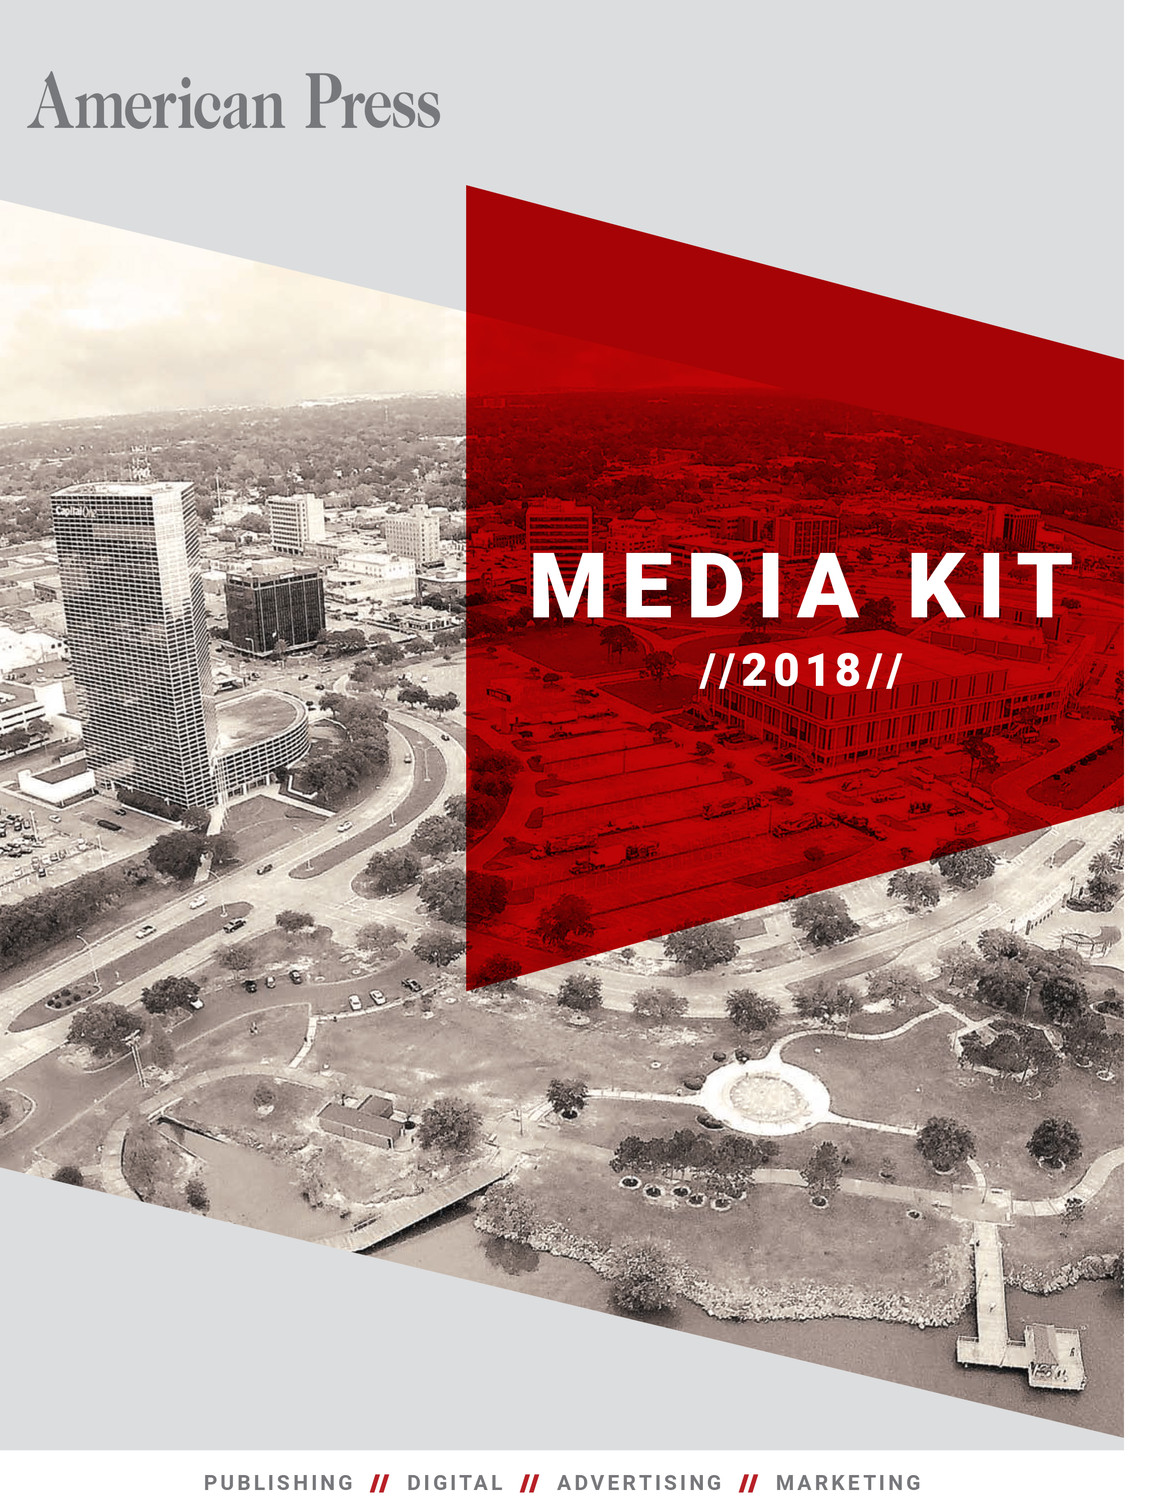 View the 2018 Media Kit